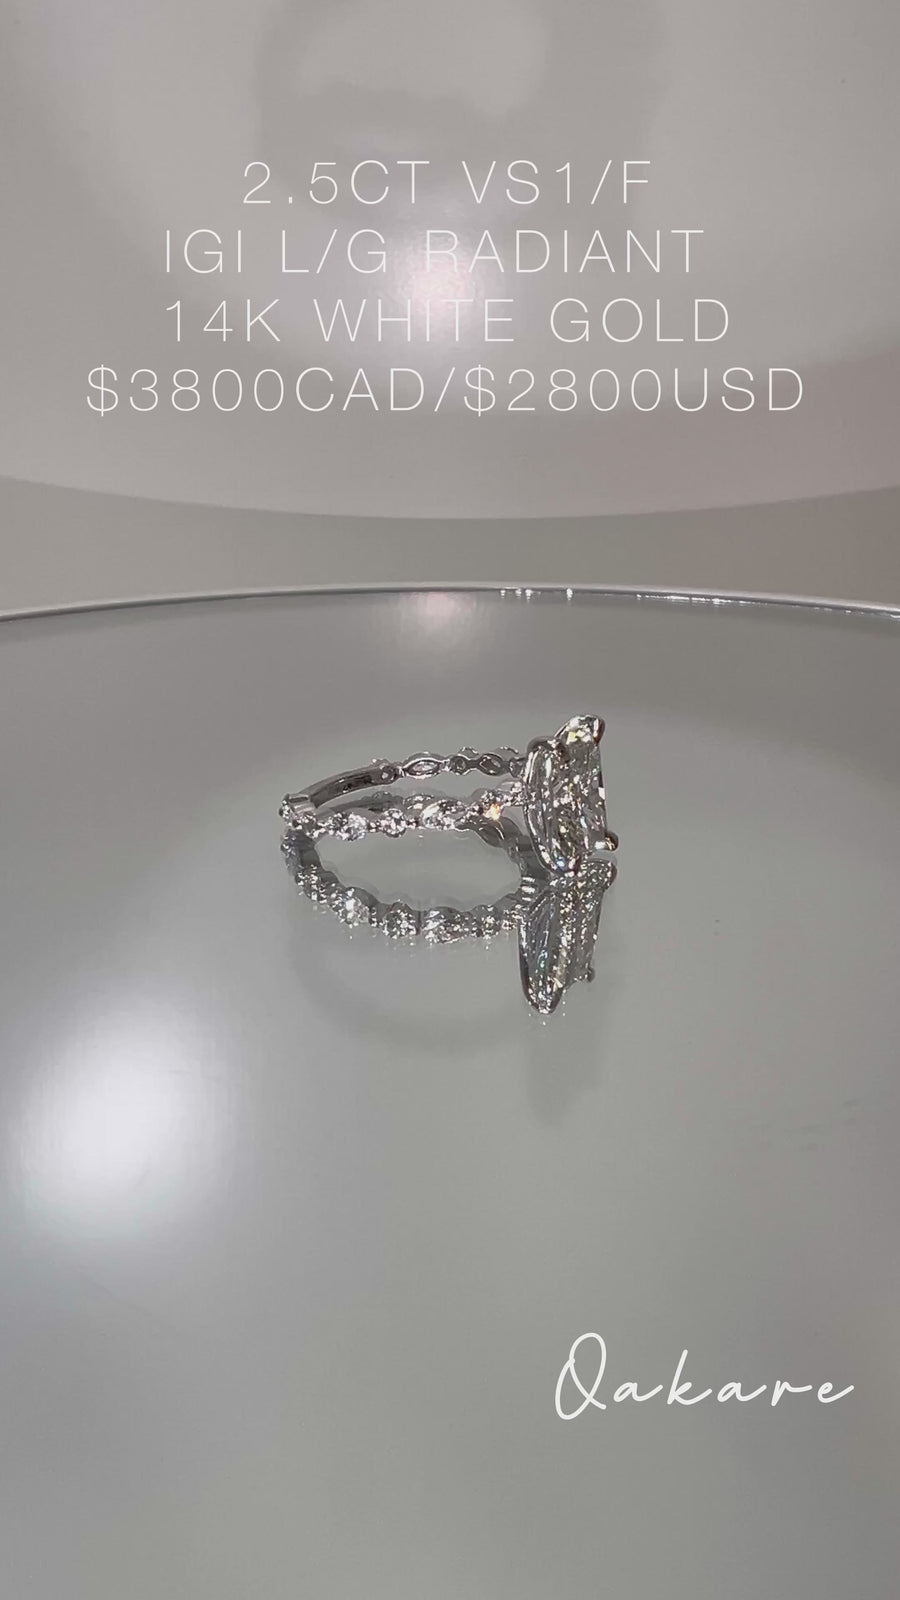 Solid 14k Gold 2.5ct F VS1 Lab Radiant Diamond Ring with Side Lab Diamonds